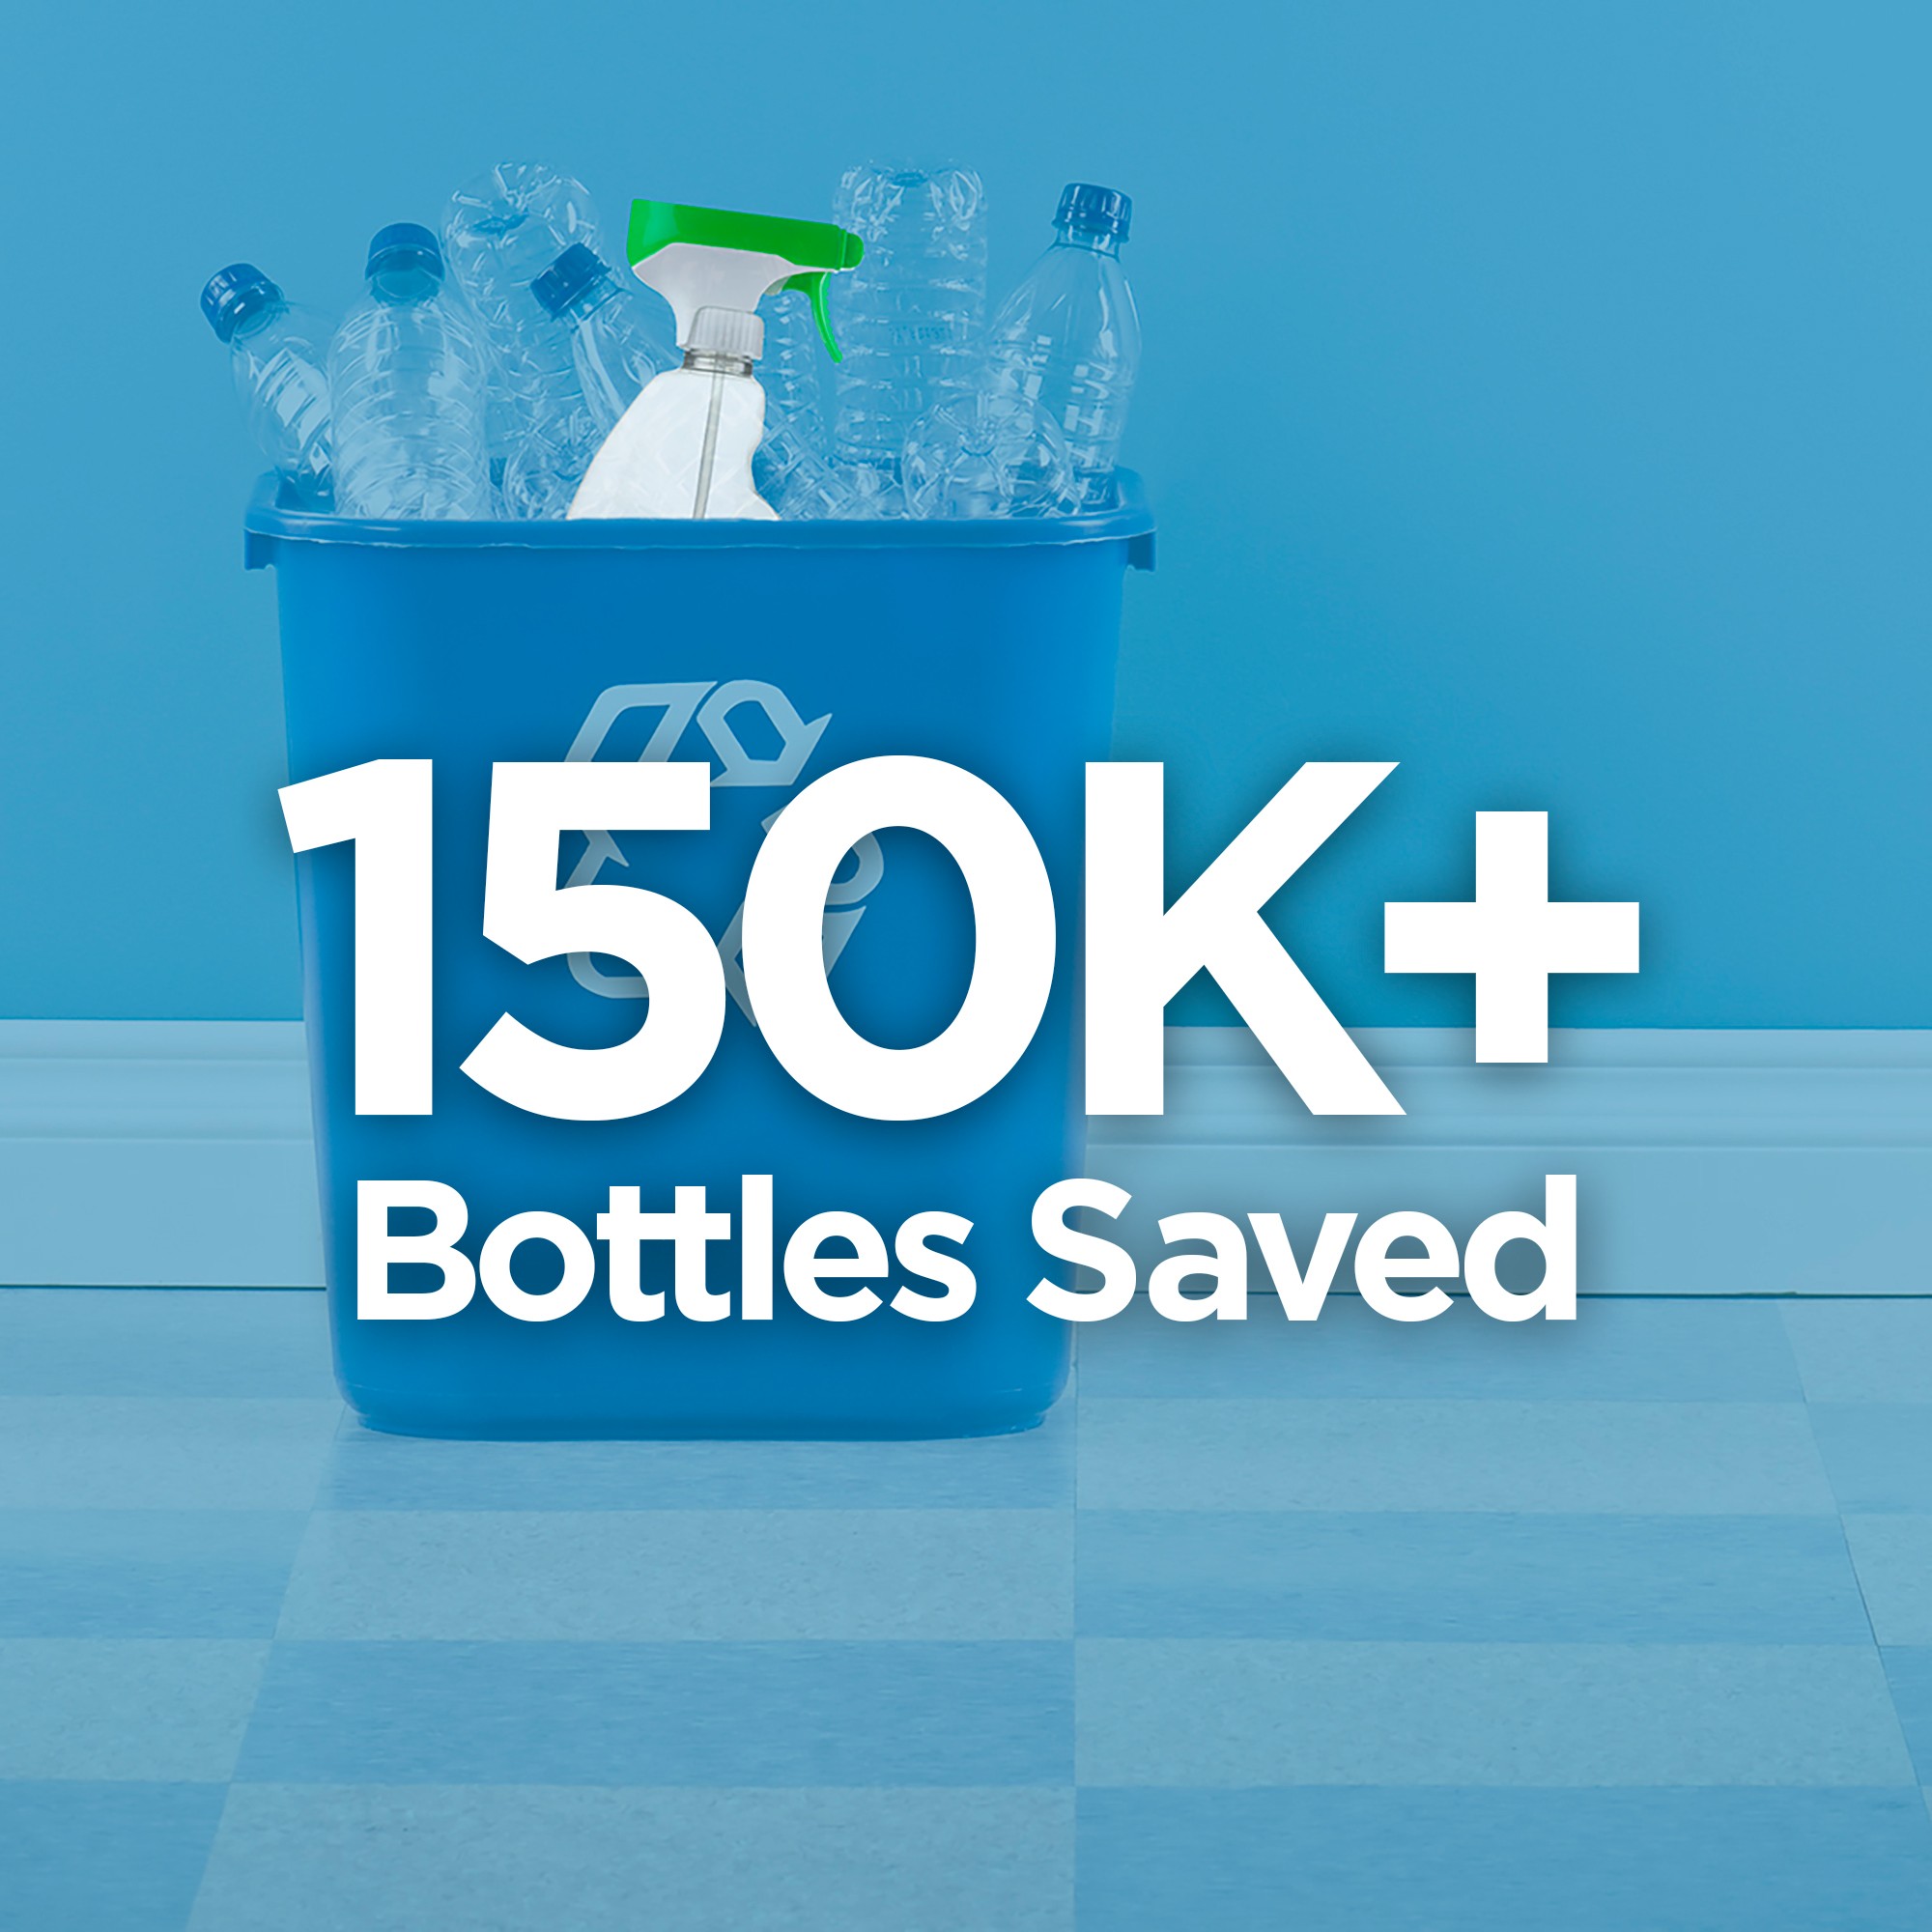 Together, Planet Hopers have saved 90,000+ plastic bottles from landfill